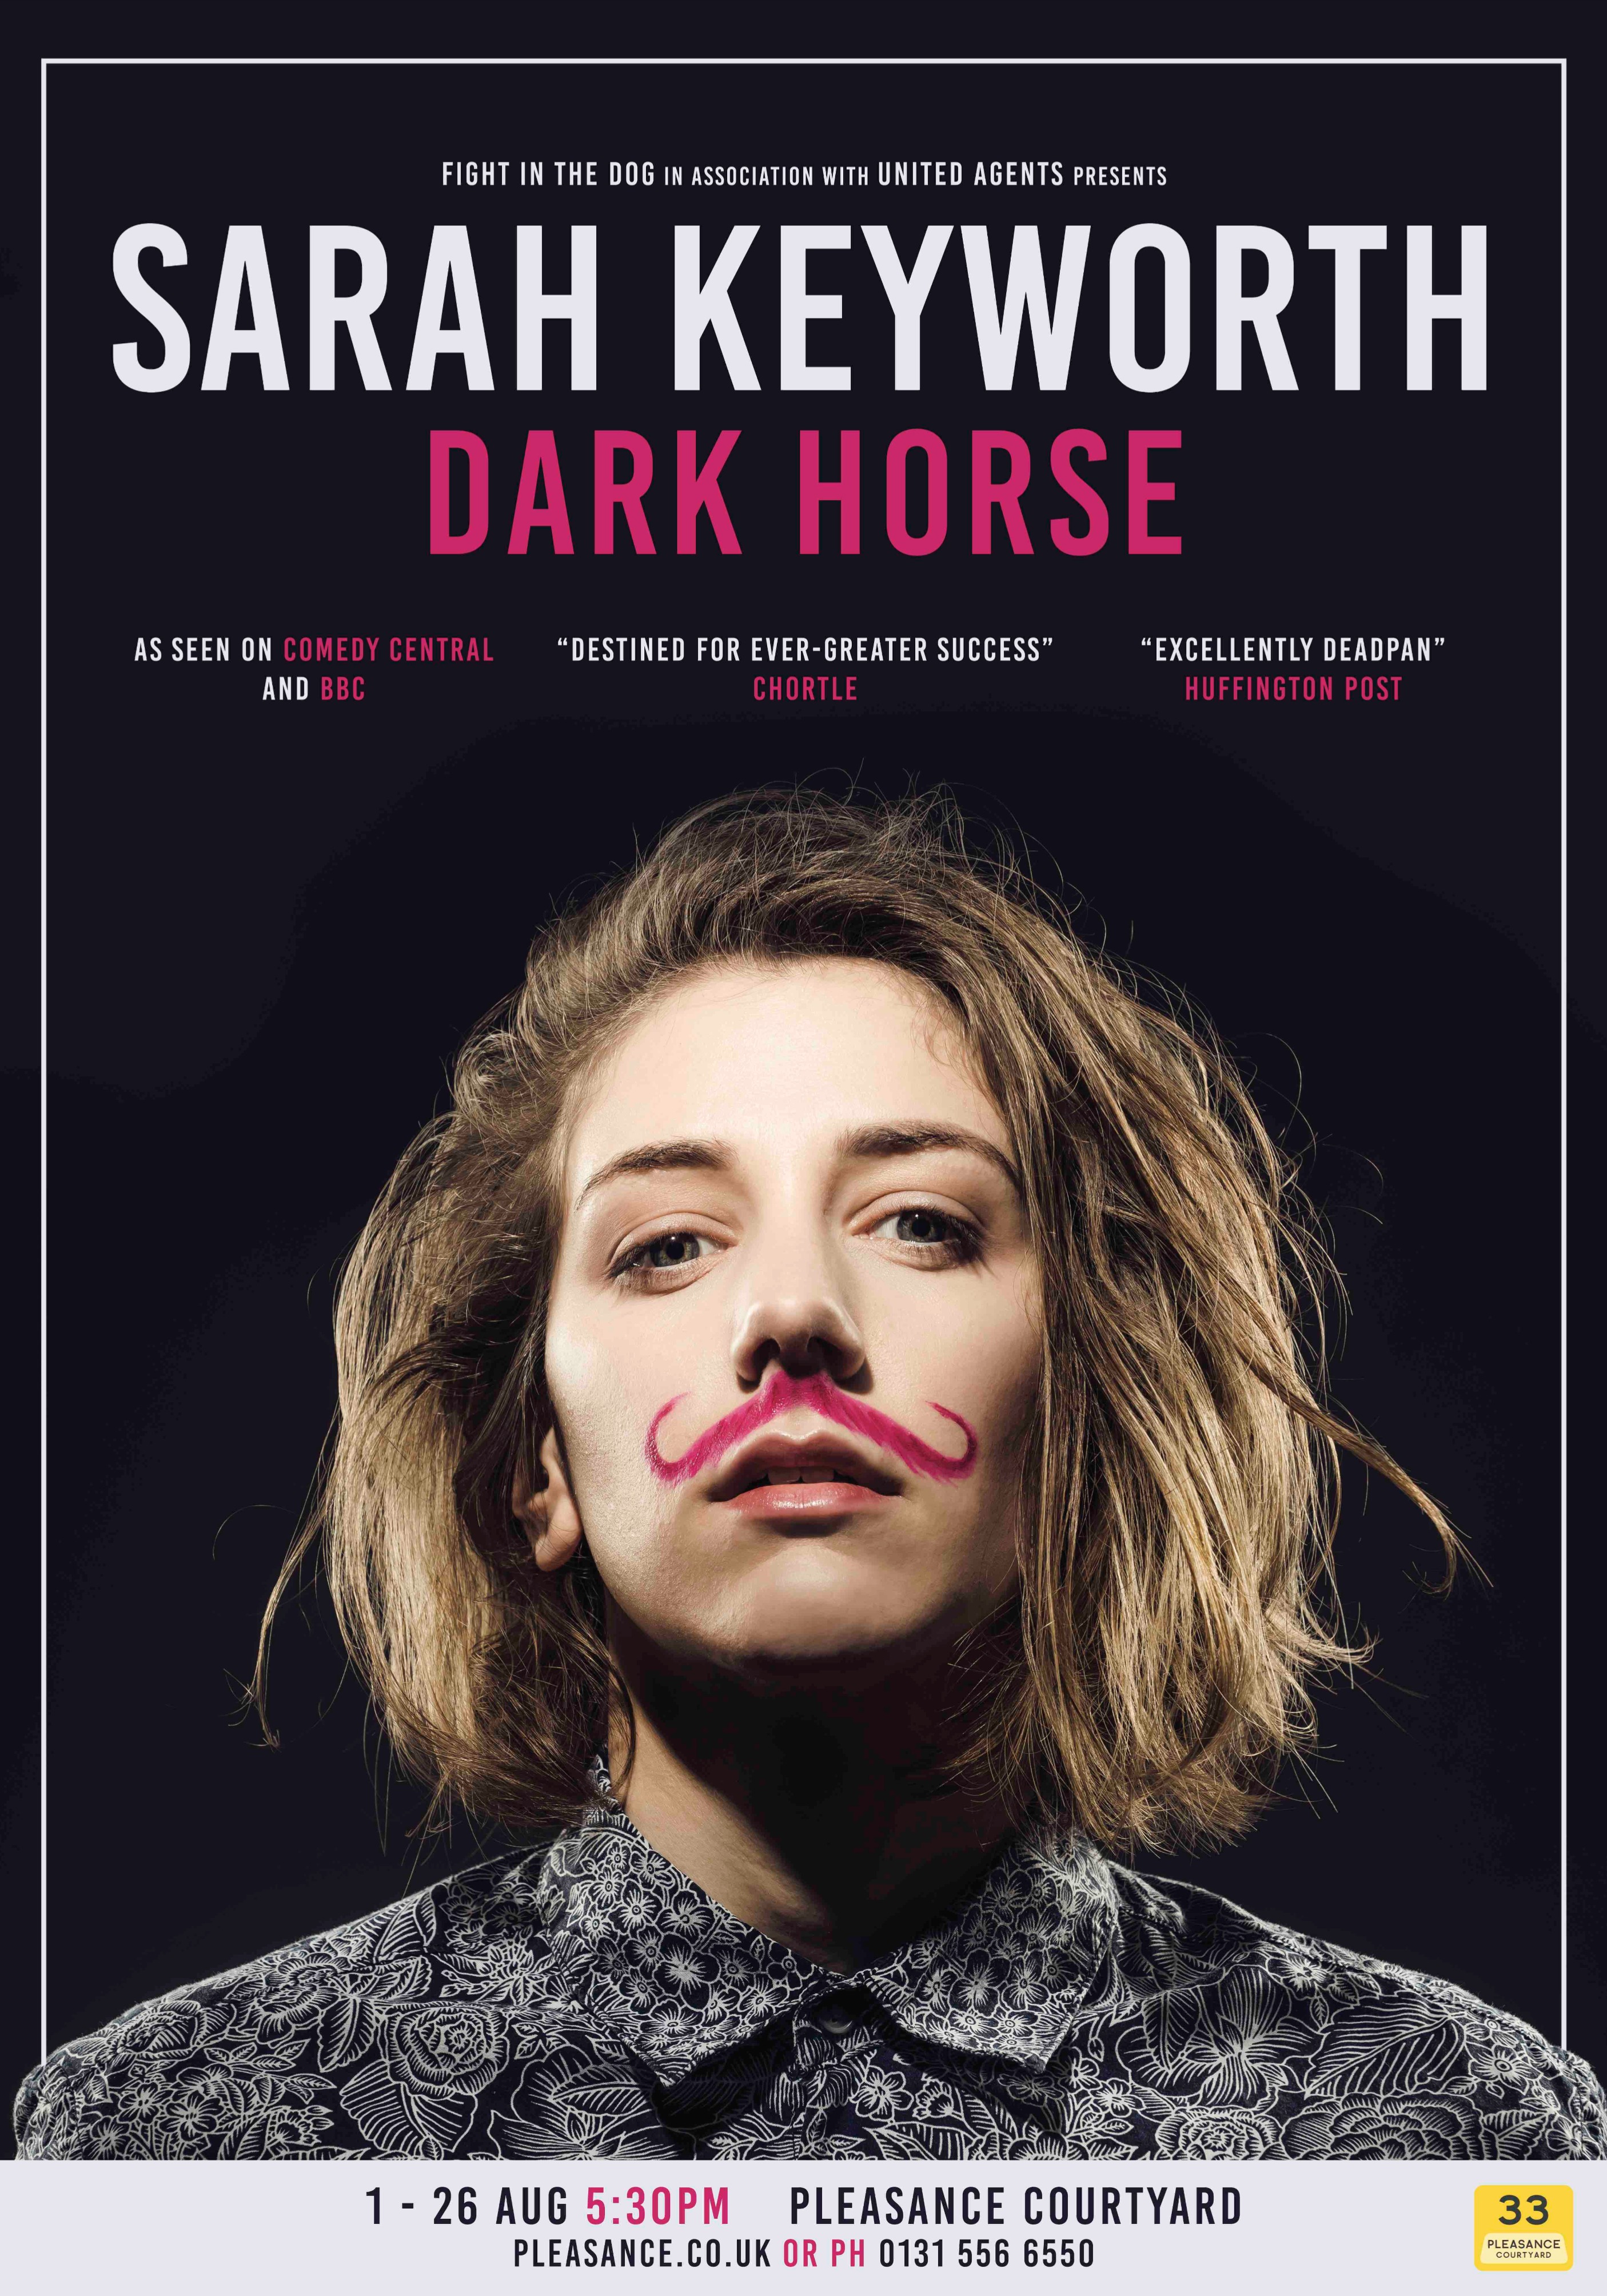 The poster for Sarah Keyworth: Dark Horse